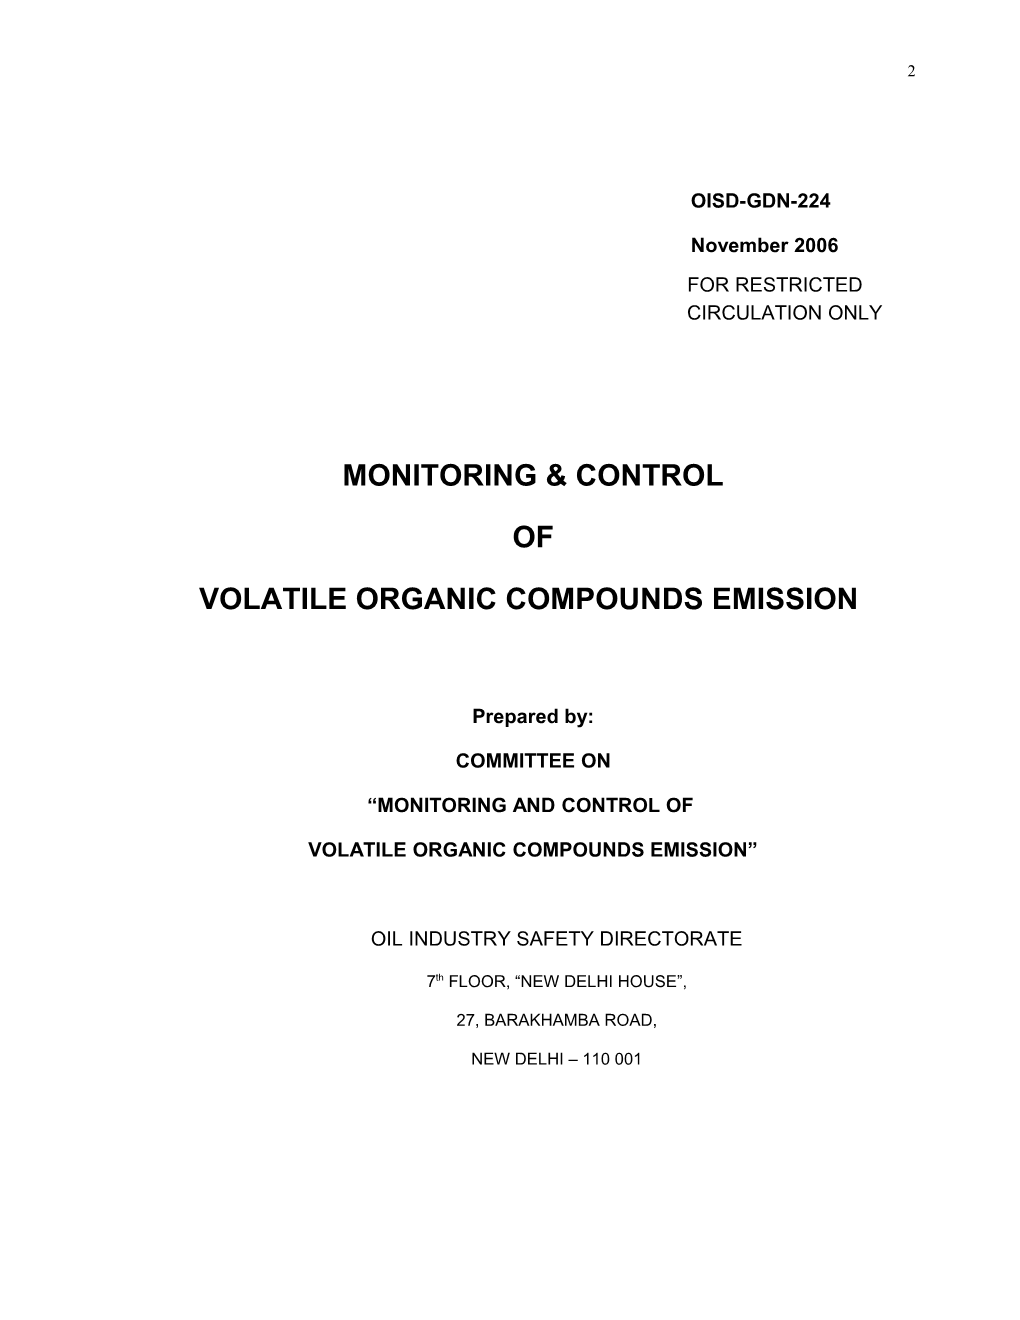 Volatile Organic Compounds Emission